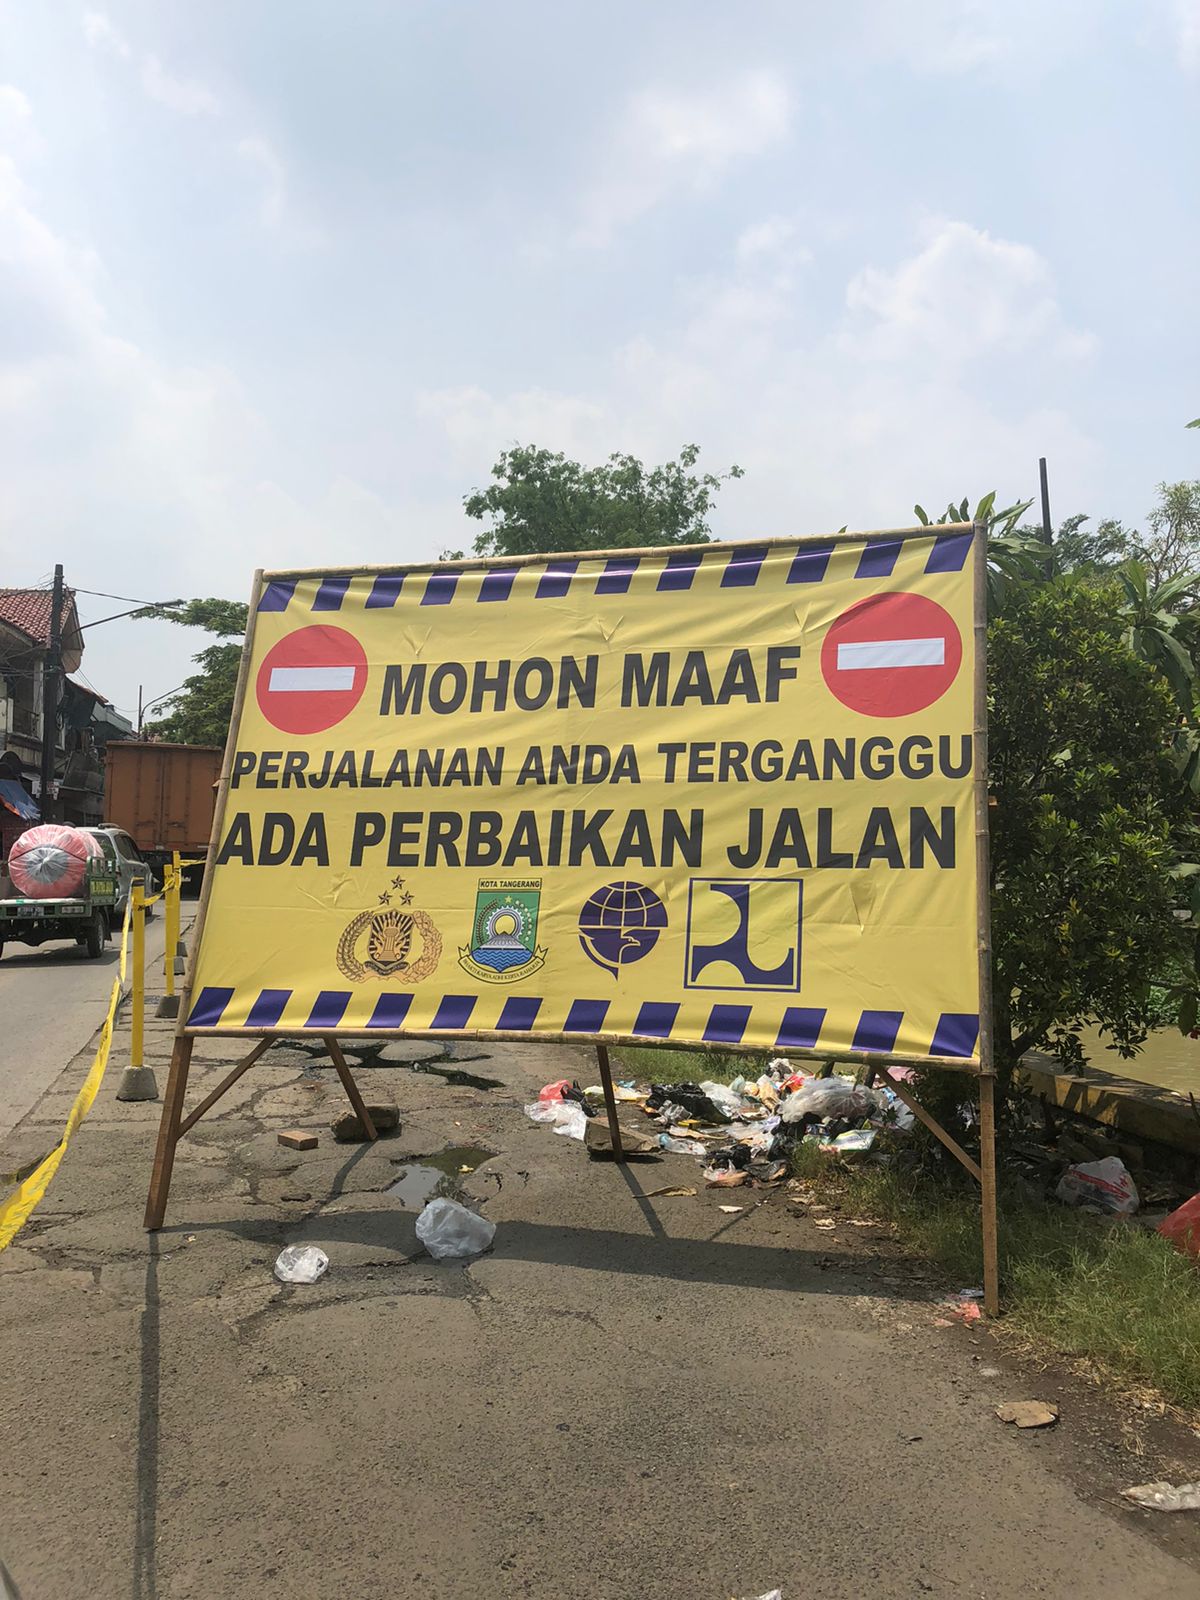 Kondisi Jalan Halim Perdana Kusuma, Kota Tangerang dalam proses perbaikan jalan, Rabu 8 September 2021 pagi.